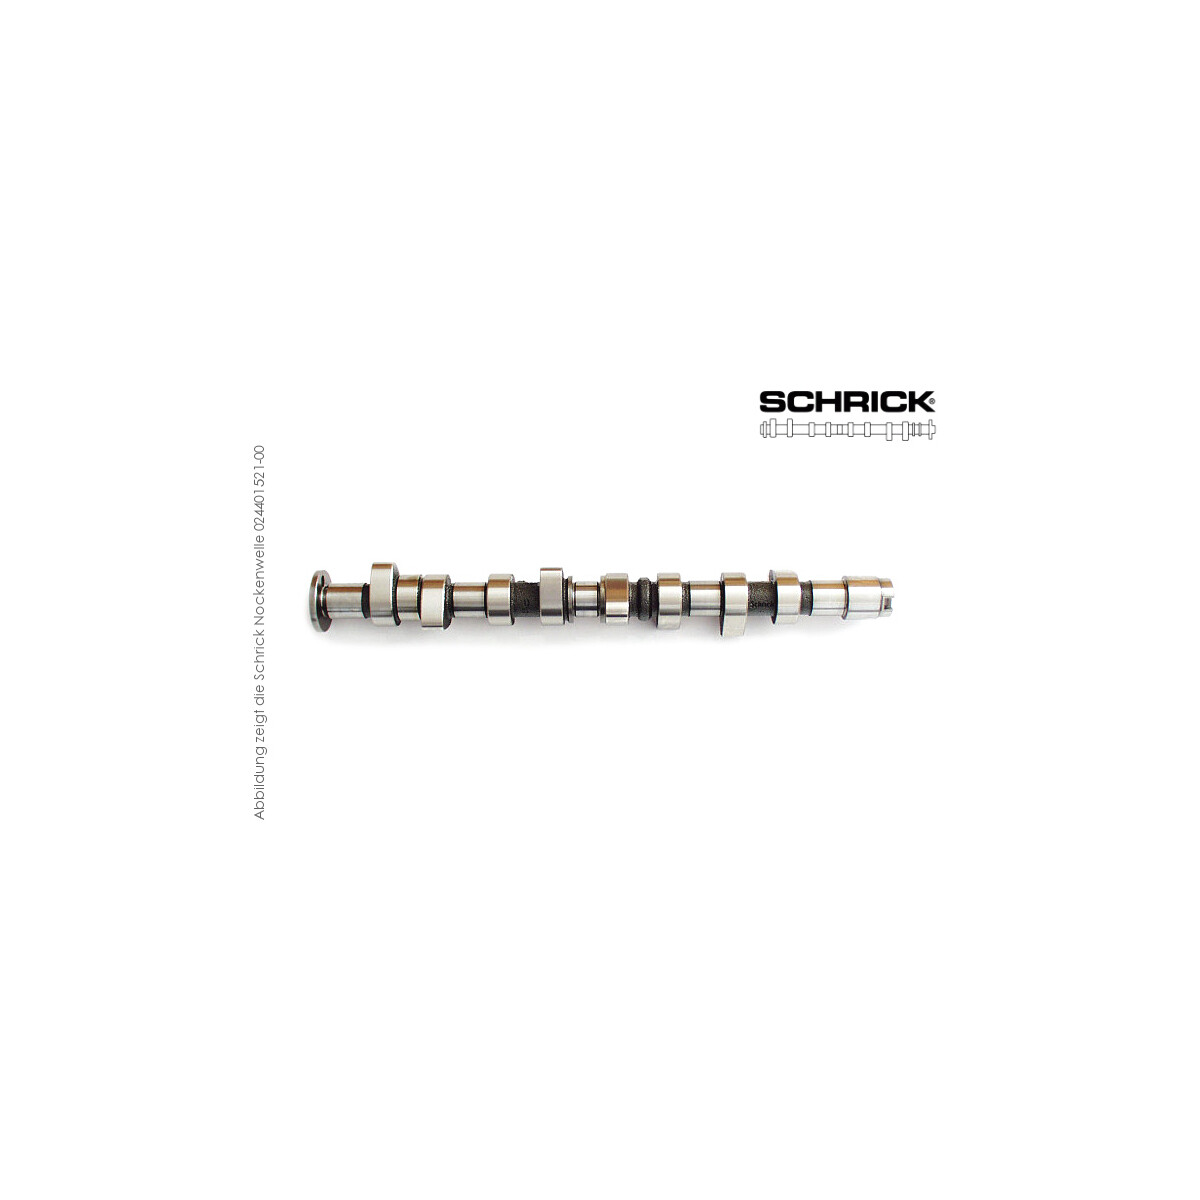 Schrick Nockenwelle für Audi 80, 90 | 1,8-2,0L 16V 4-Zyl. , 16V | 300° Auslassnockenwelle (Schrick 0220A1000-03)